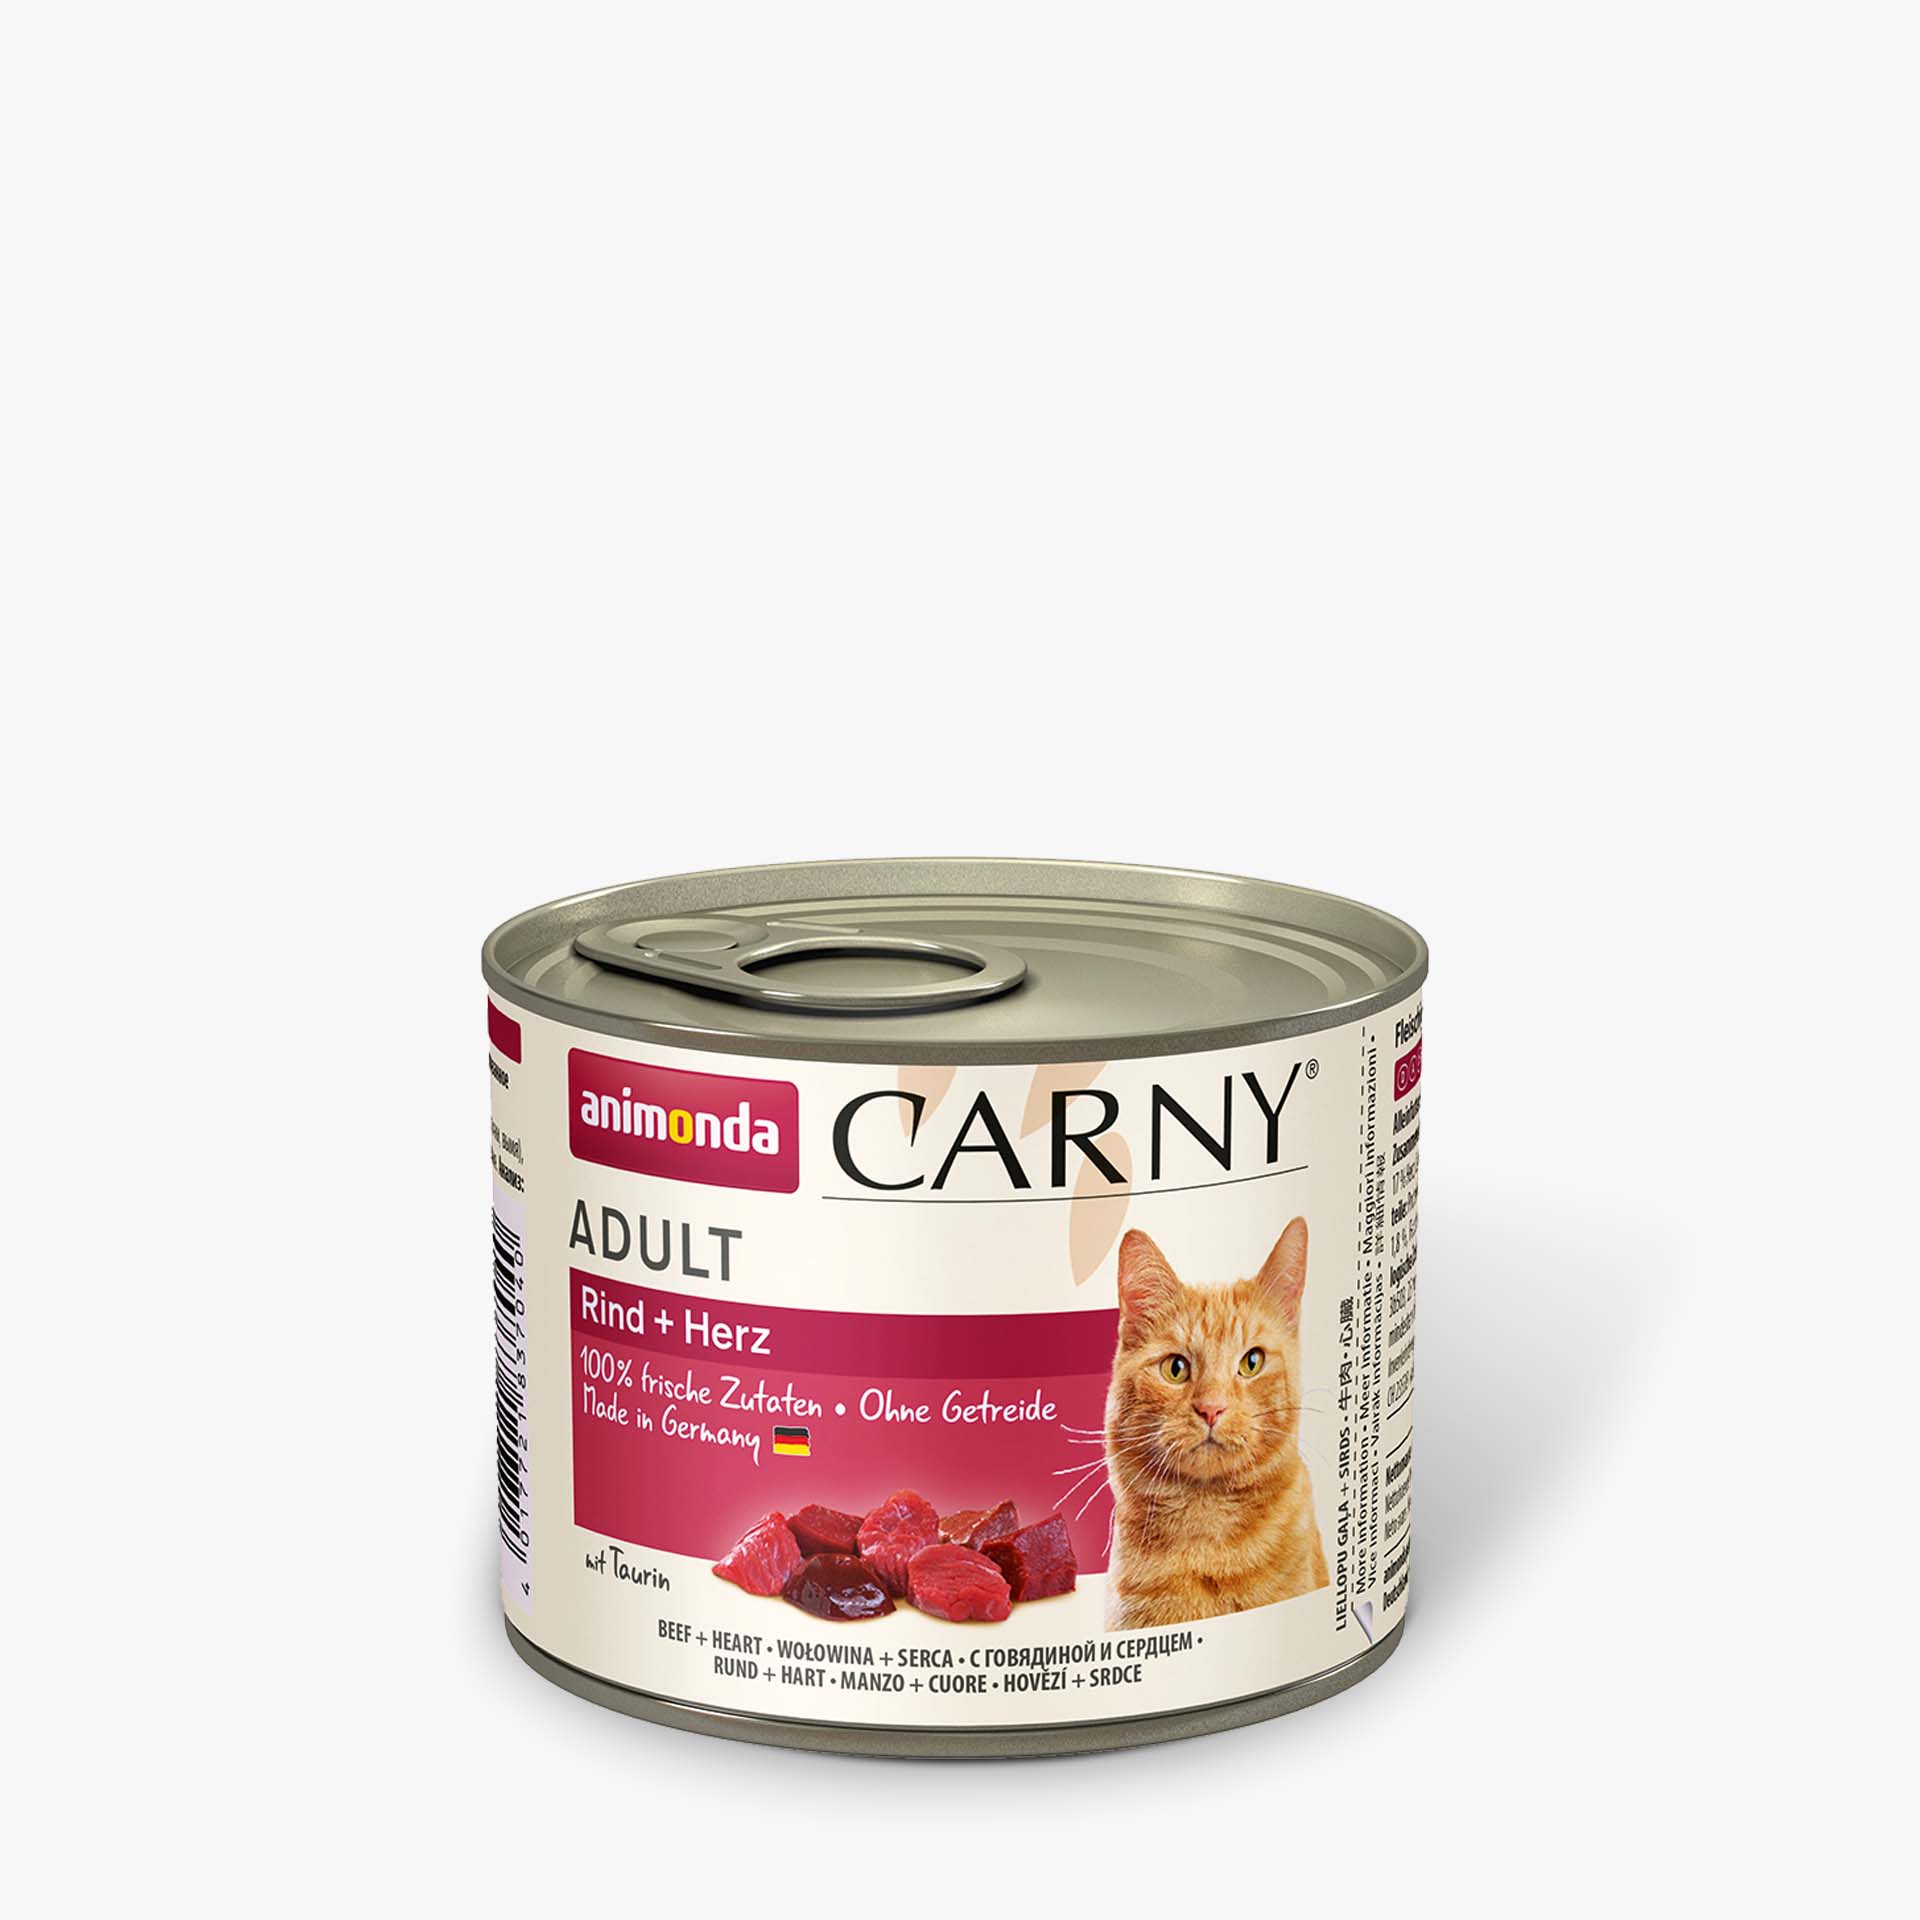 Carny Adult Rind + Herz